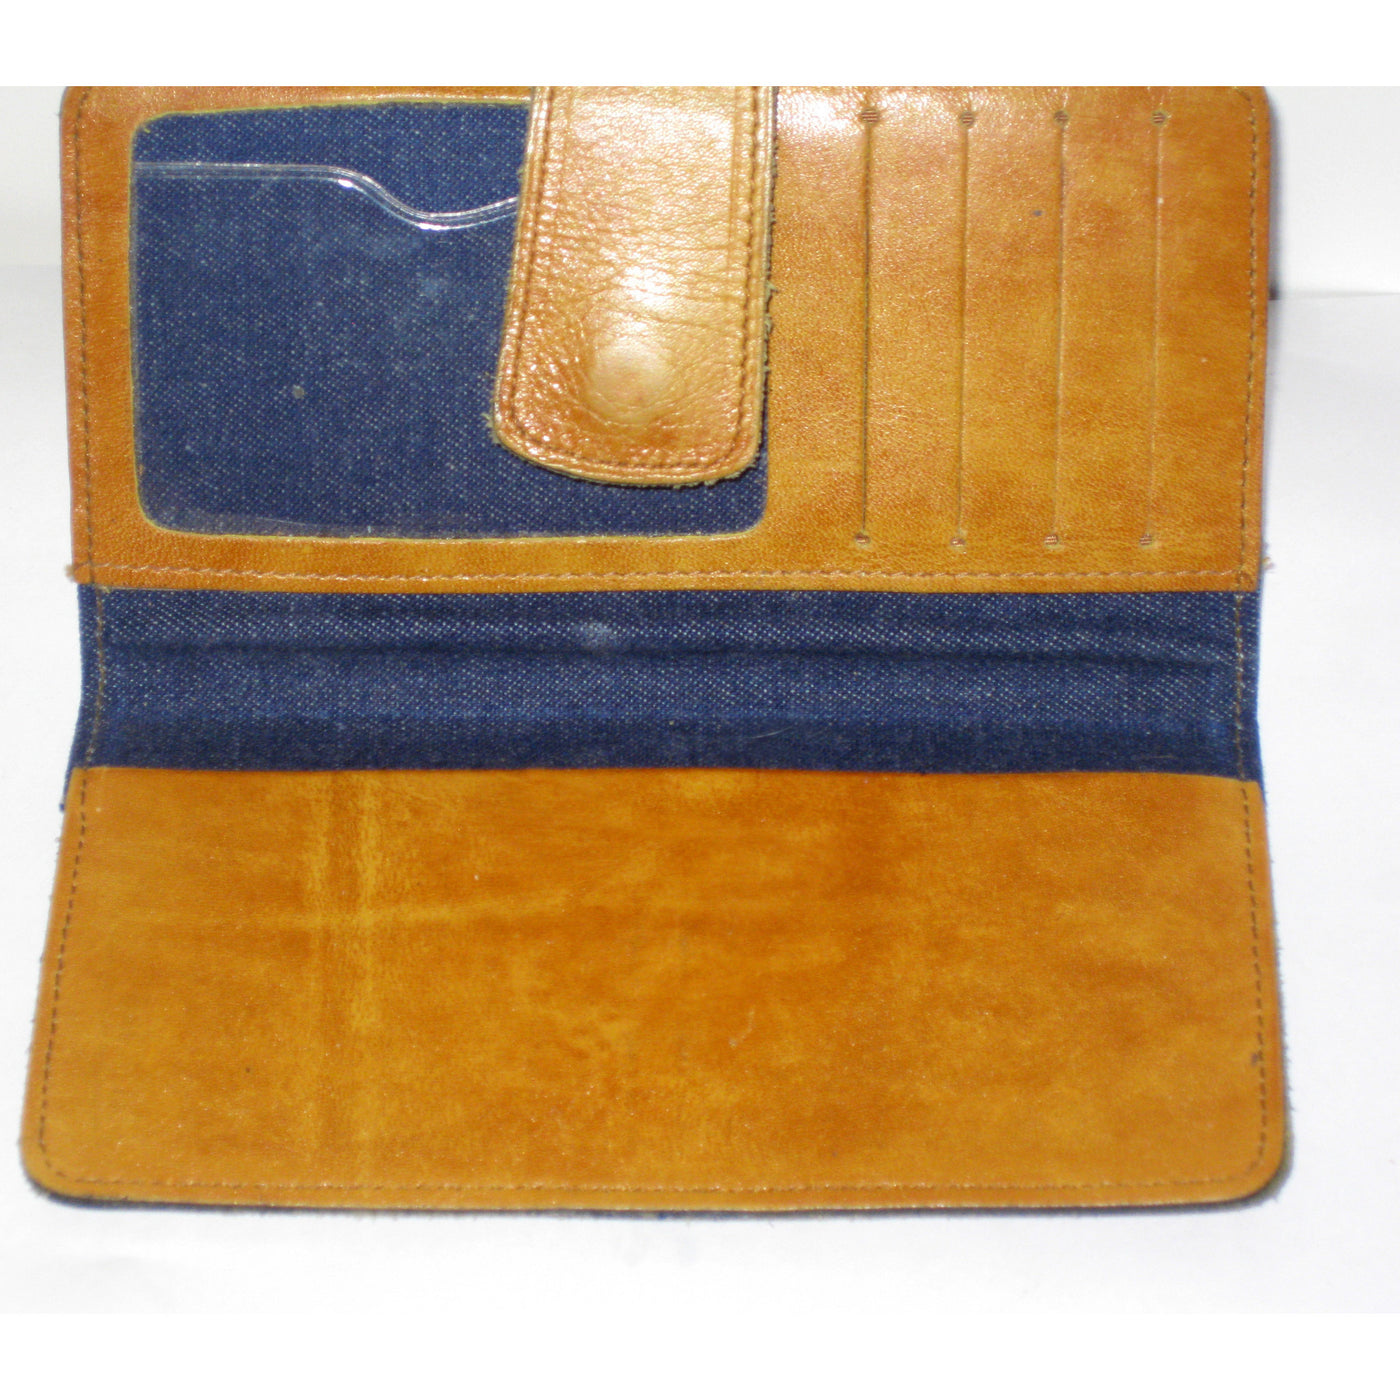 Vintage Brown Stitched Leather & Denim Wallet